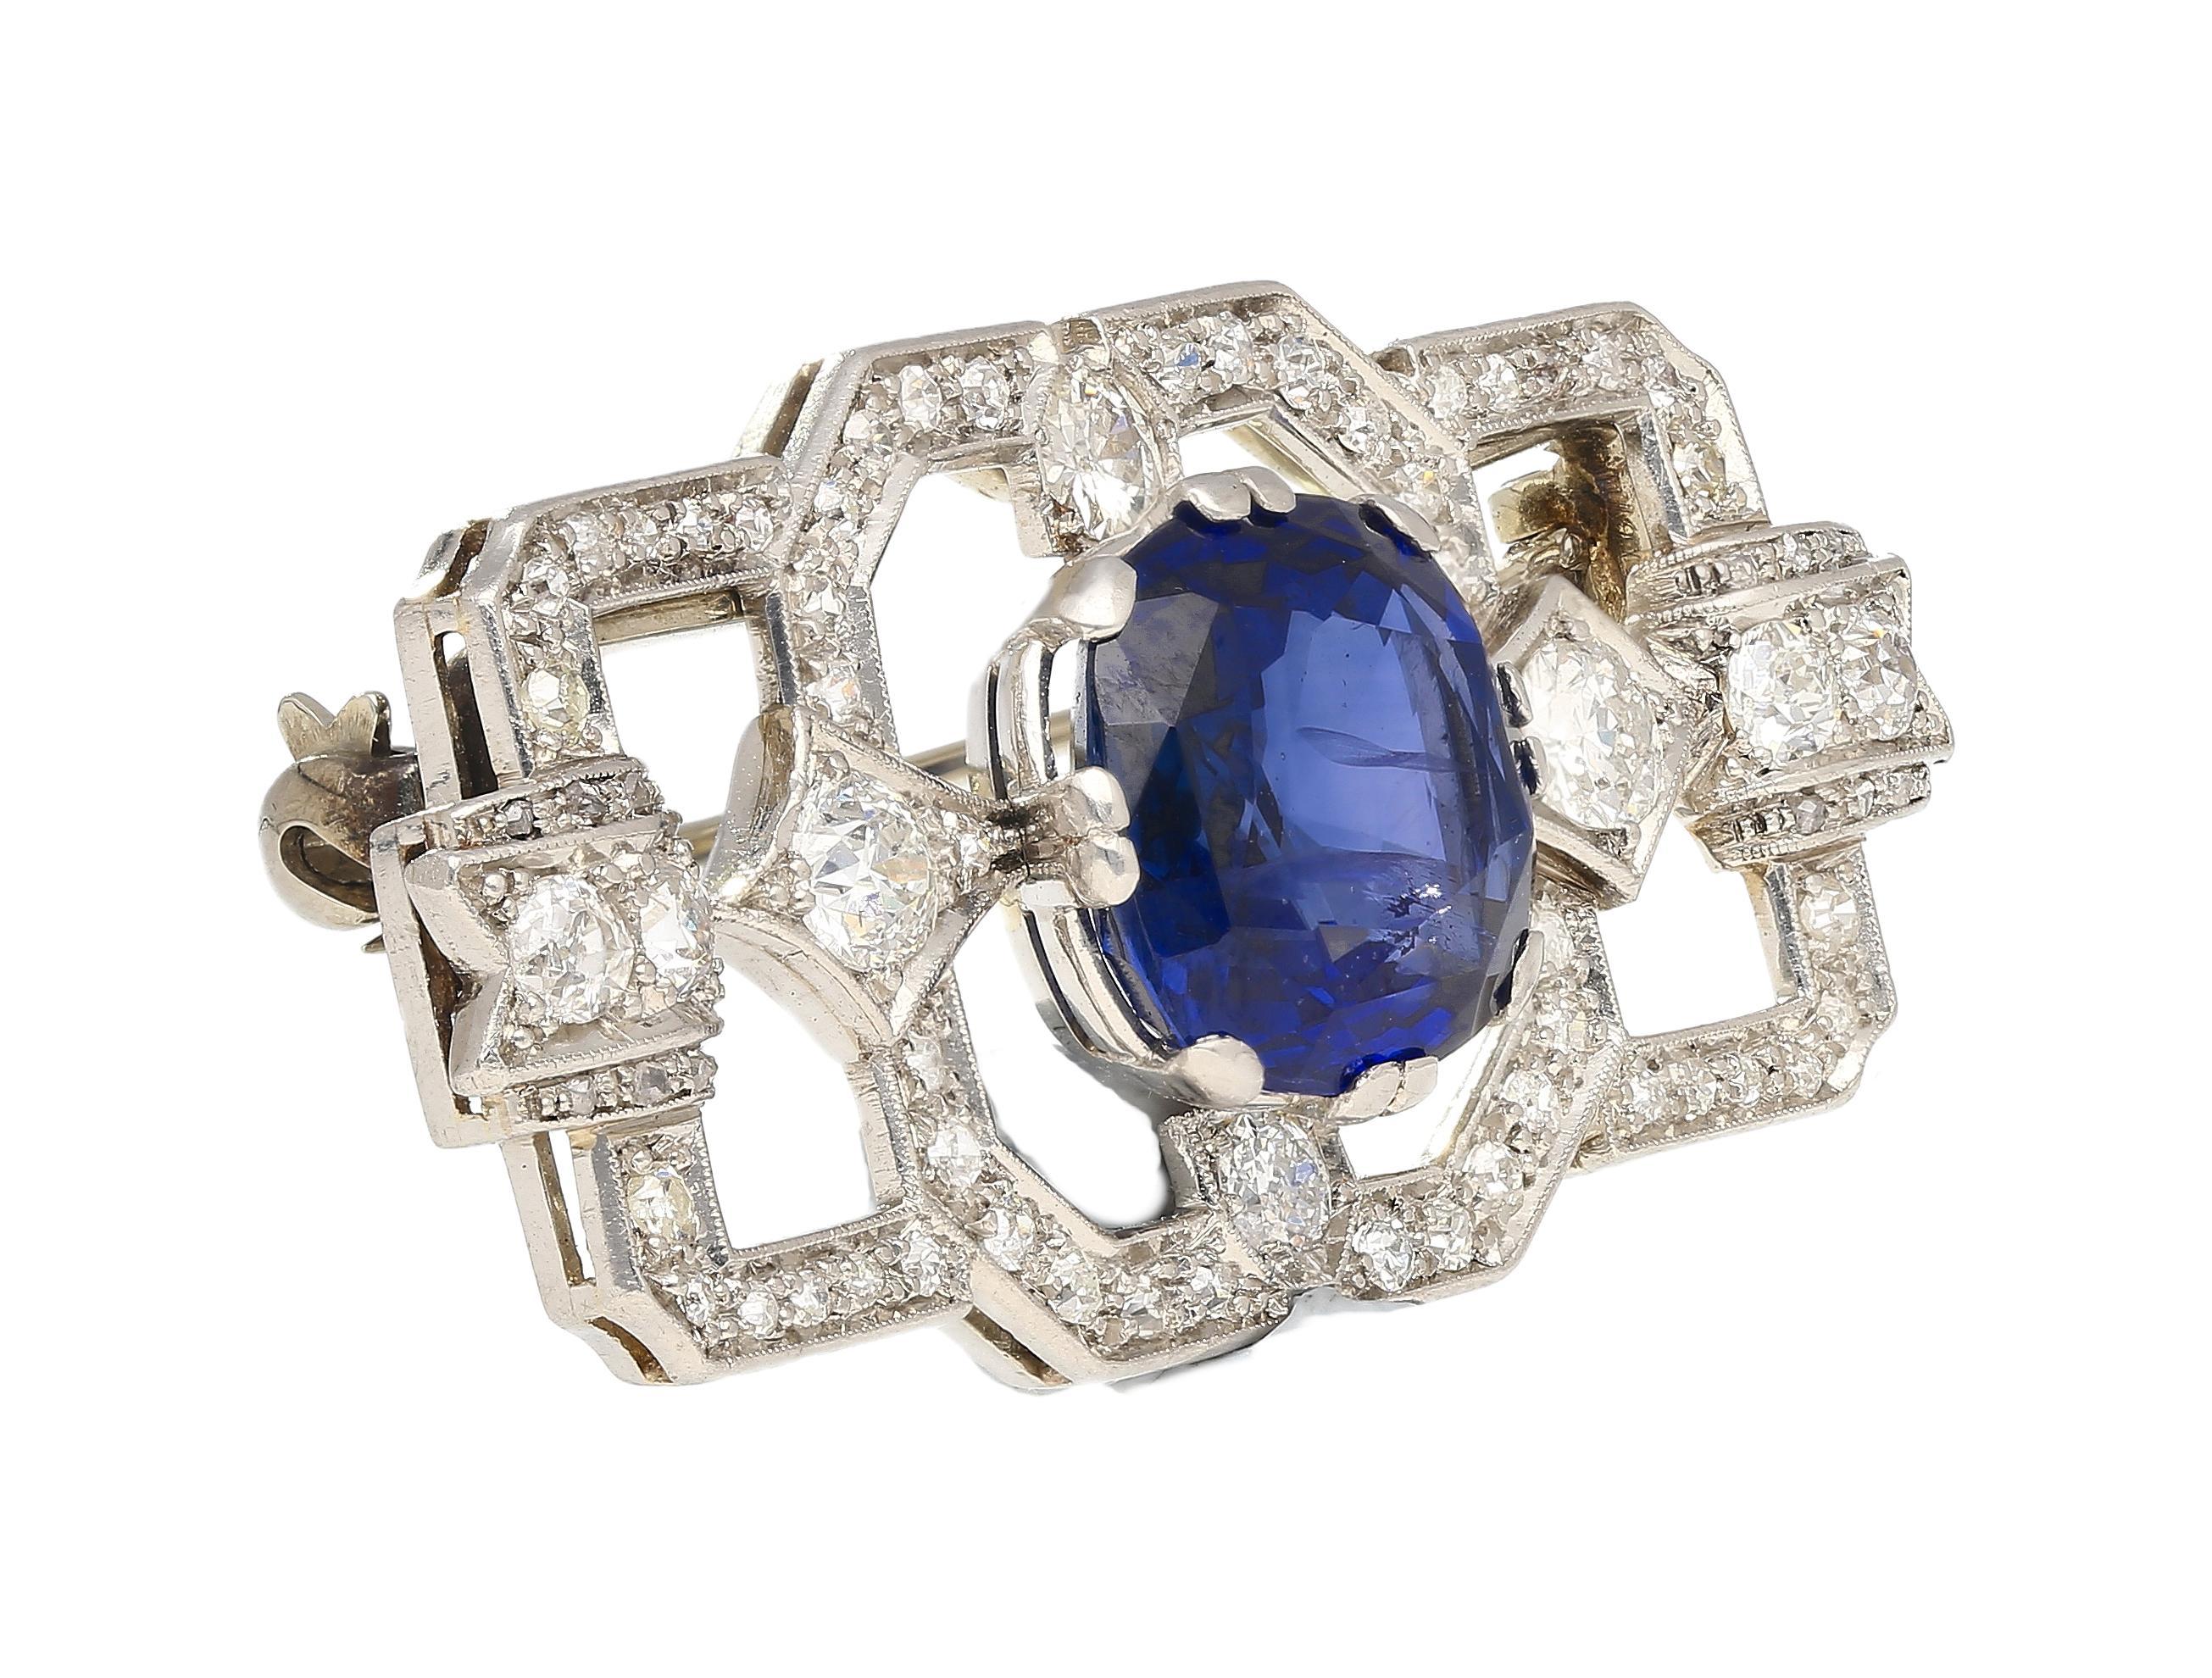 Jewelry Details:
Item Type: Brooch Pin
Metal Type: Platinum
Weight: 12.45 grams
Era: Art Deco

Center Stone Details:
Gemstone Type: Sapphire
Carat: 8.64 Carats
Cut: Cushion Cut
Color: Blue
Treatment: No Heat
Origin: Ceylon (Sri Lanka)
Certification: